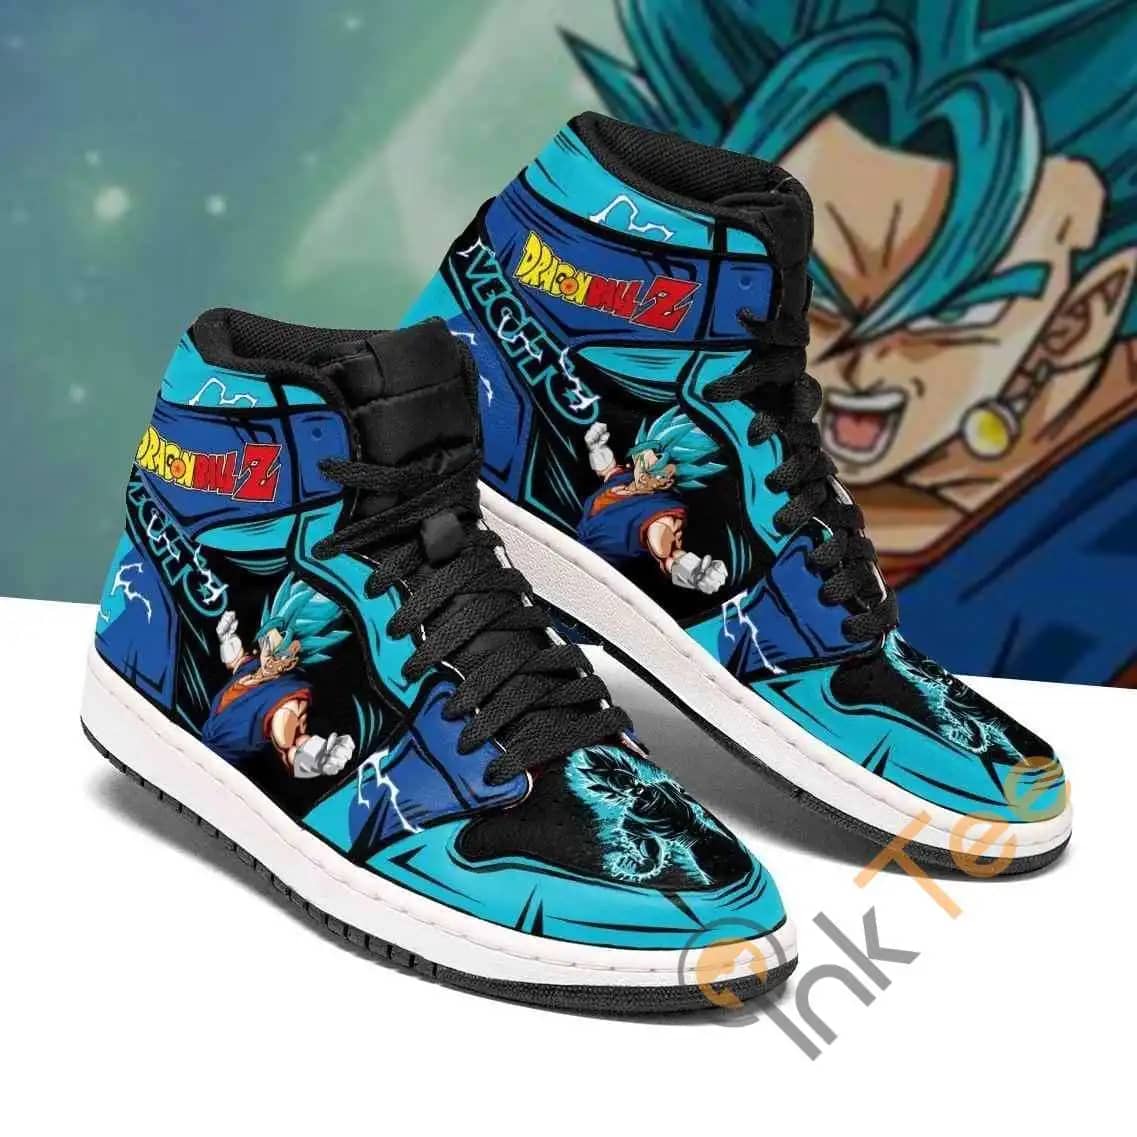 Vegito Blue Dragon Ball Z Anime Sneakers Air Jordan Shoes